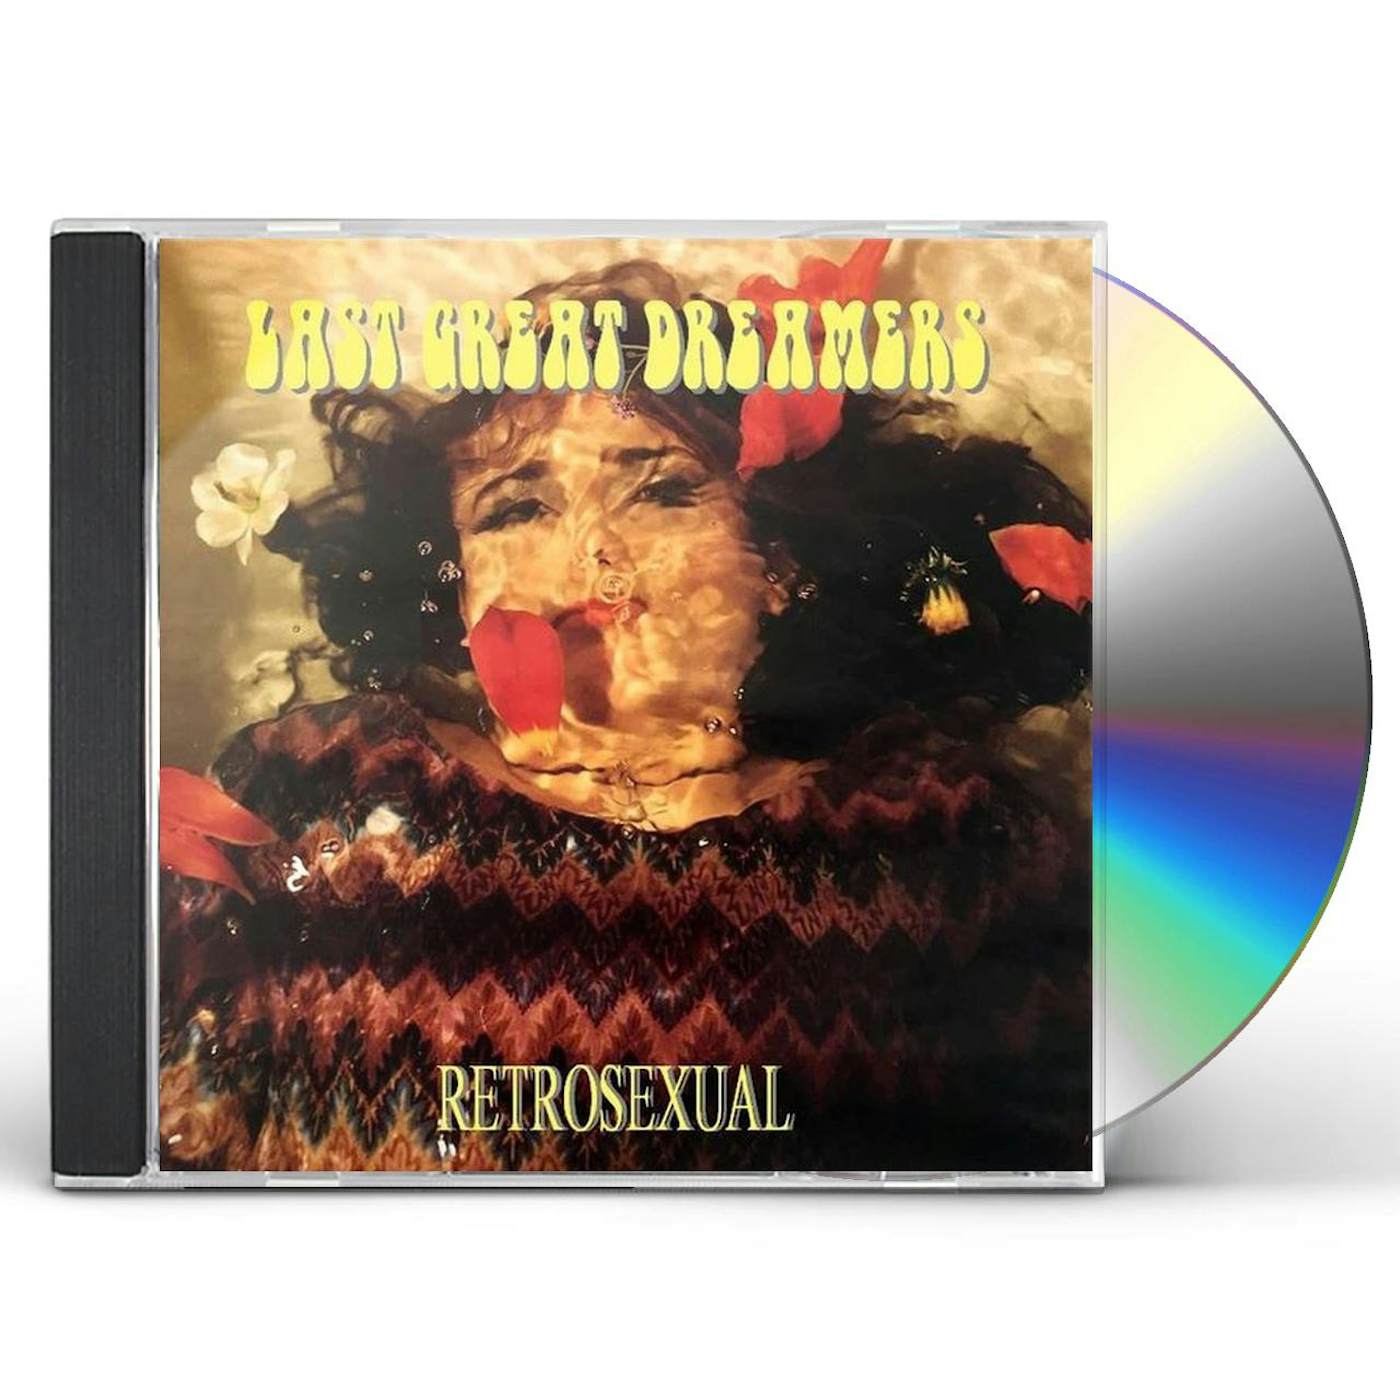 Last Great Dreamers RETROSEXUAL CD